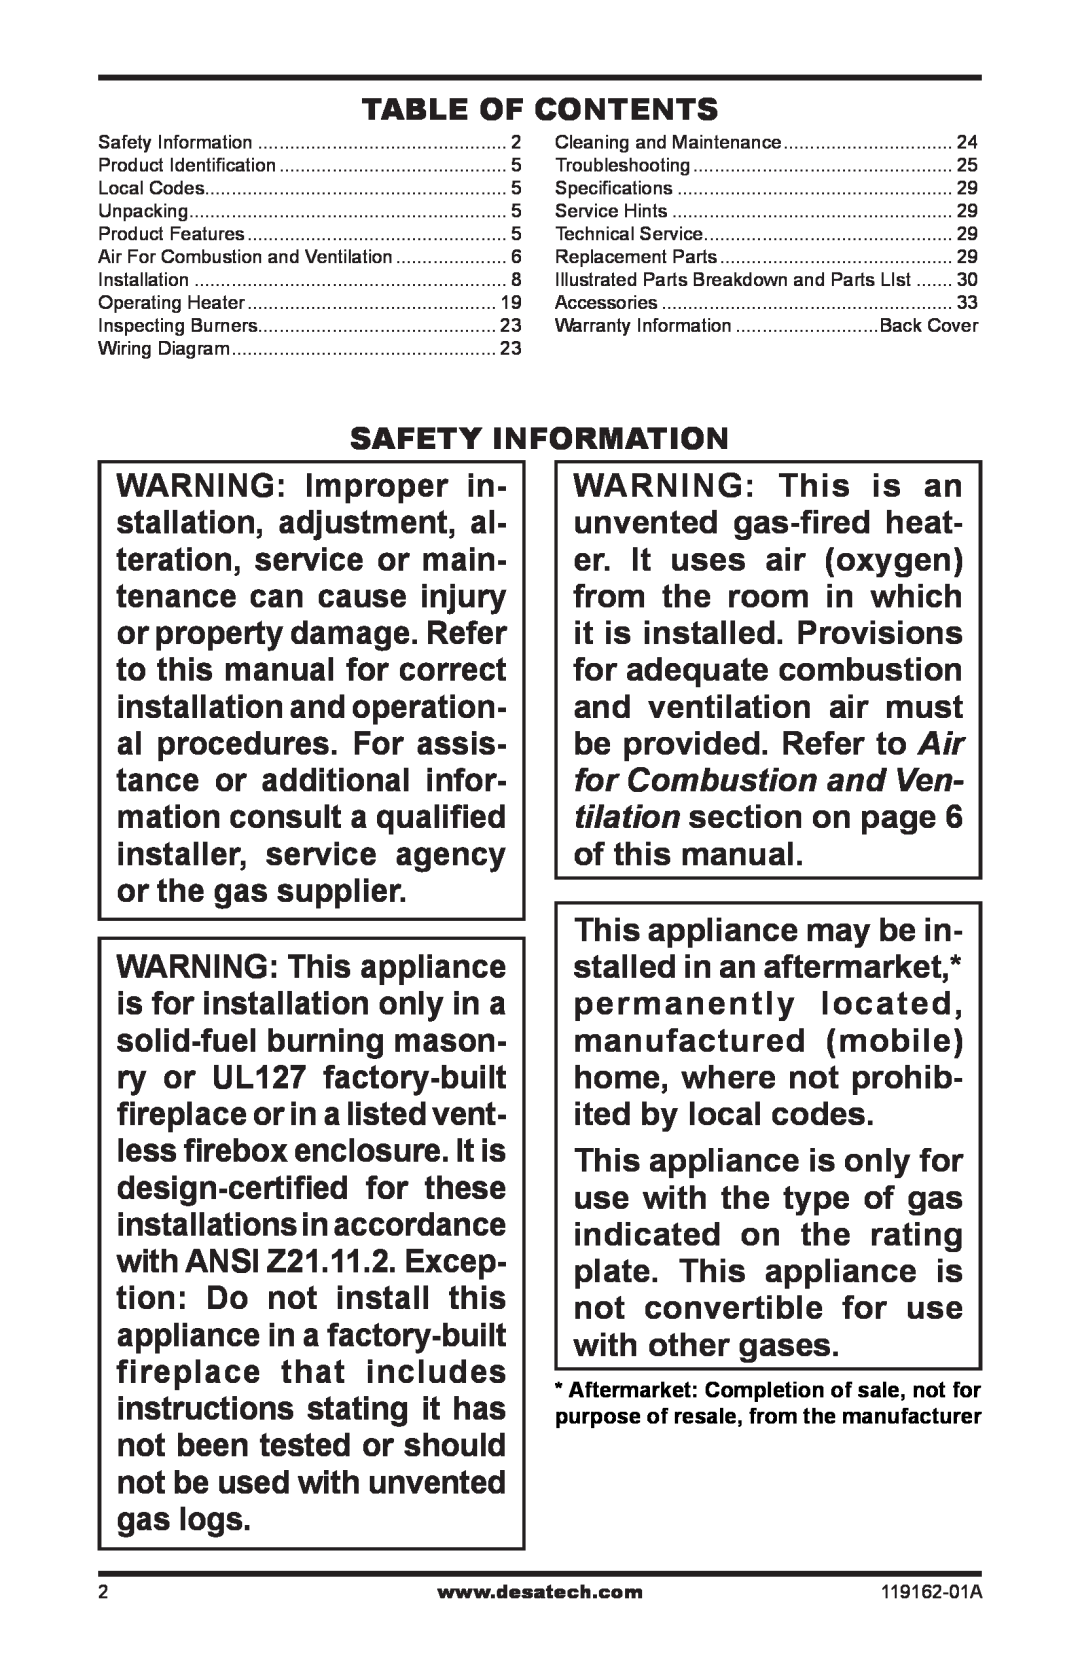 Desa VGC18NR/PR installation manual Table of Contents, Safety Information 